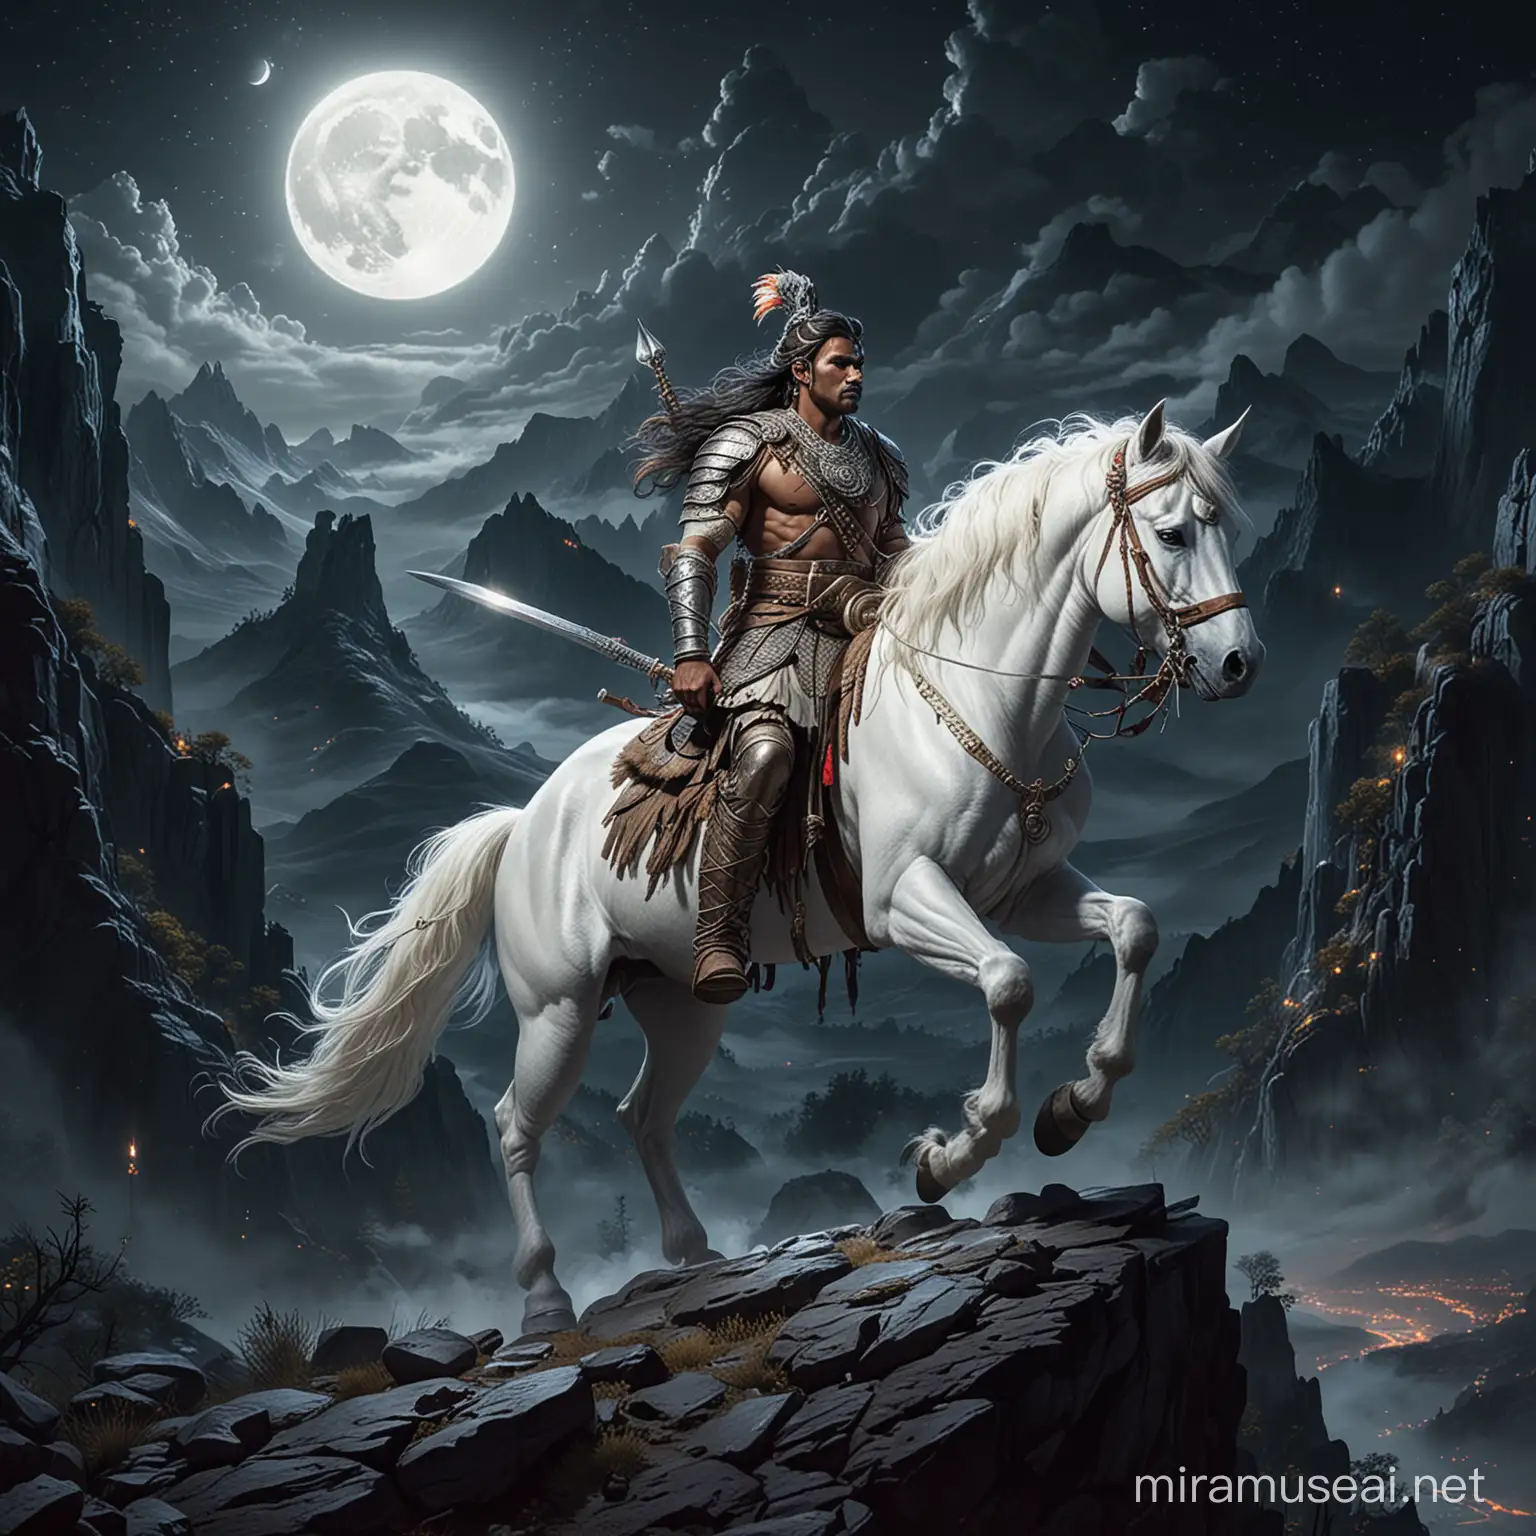 An indian warrior, on a mountain edge, on a white unicorn, Night Time, dark environment, Moon light, in a mountainous environment